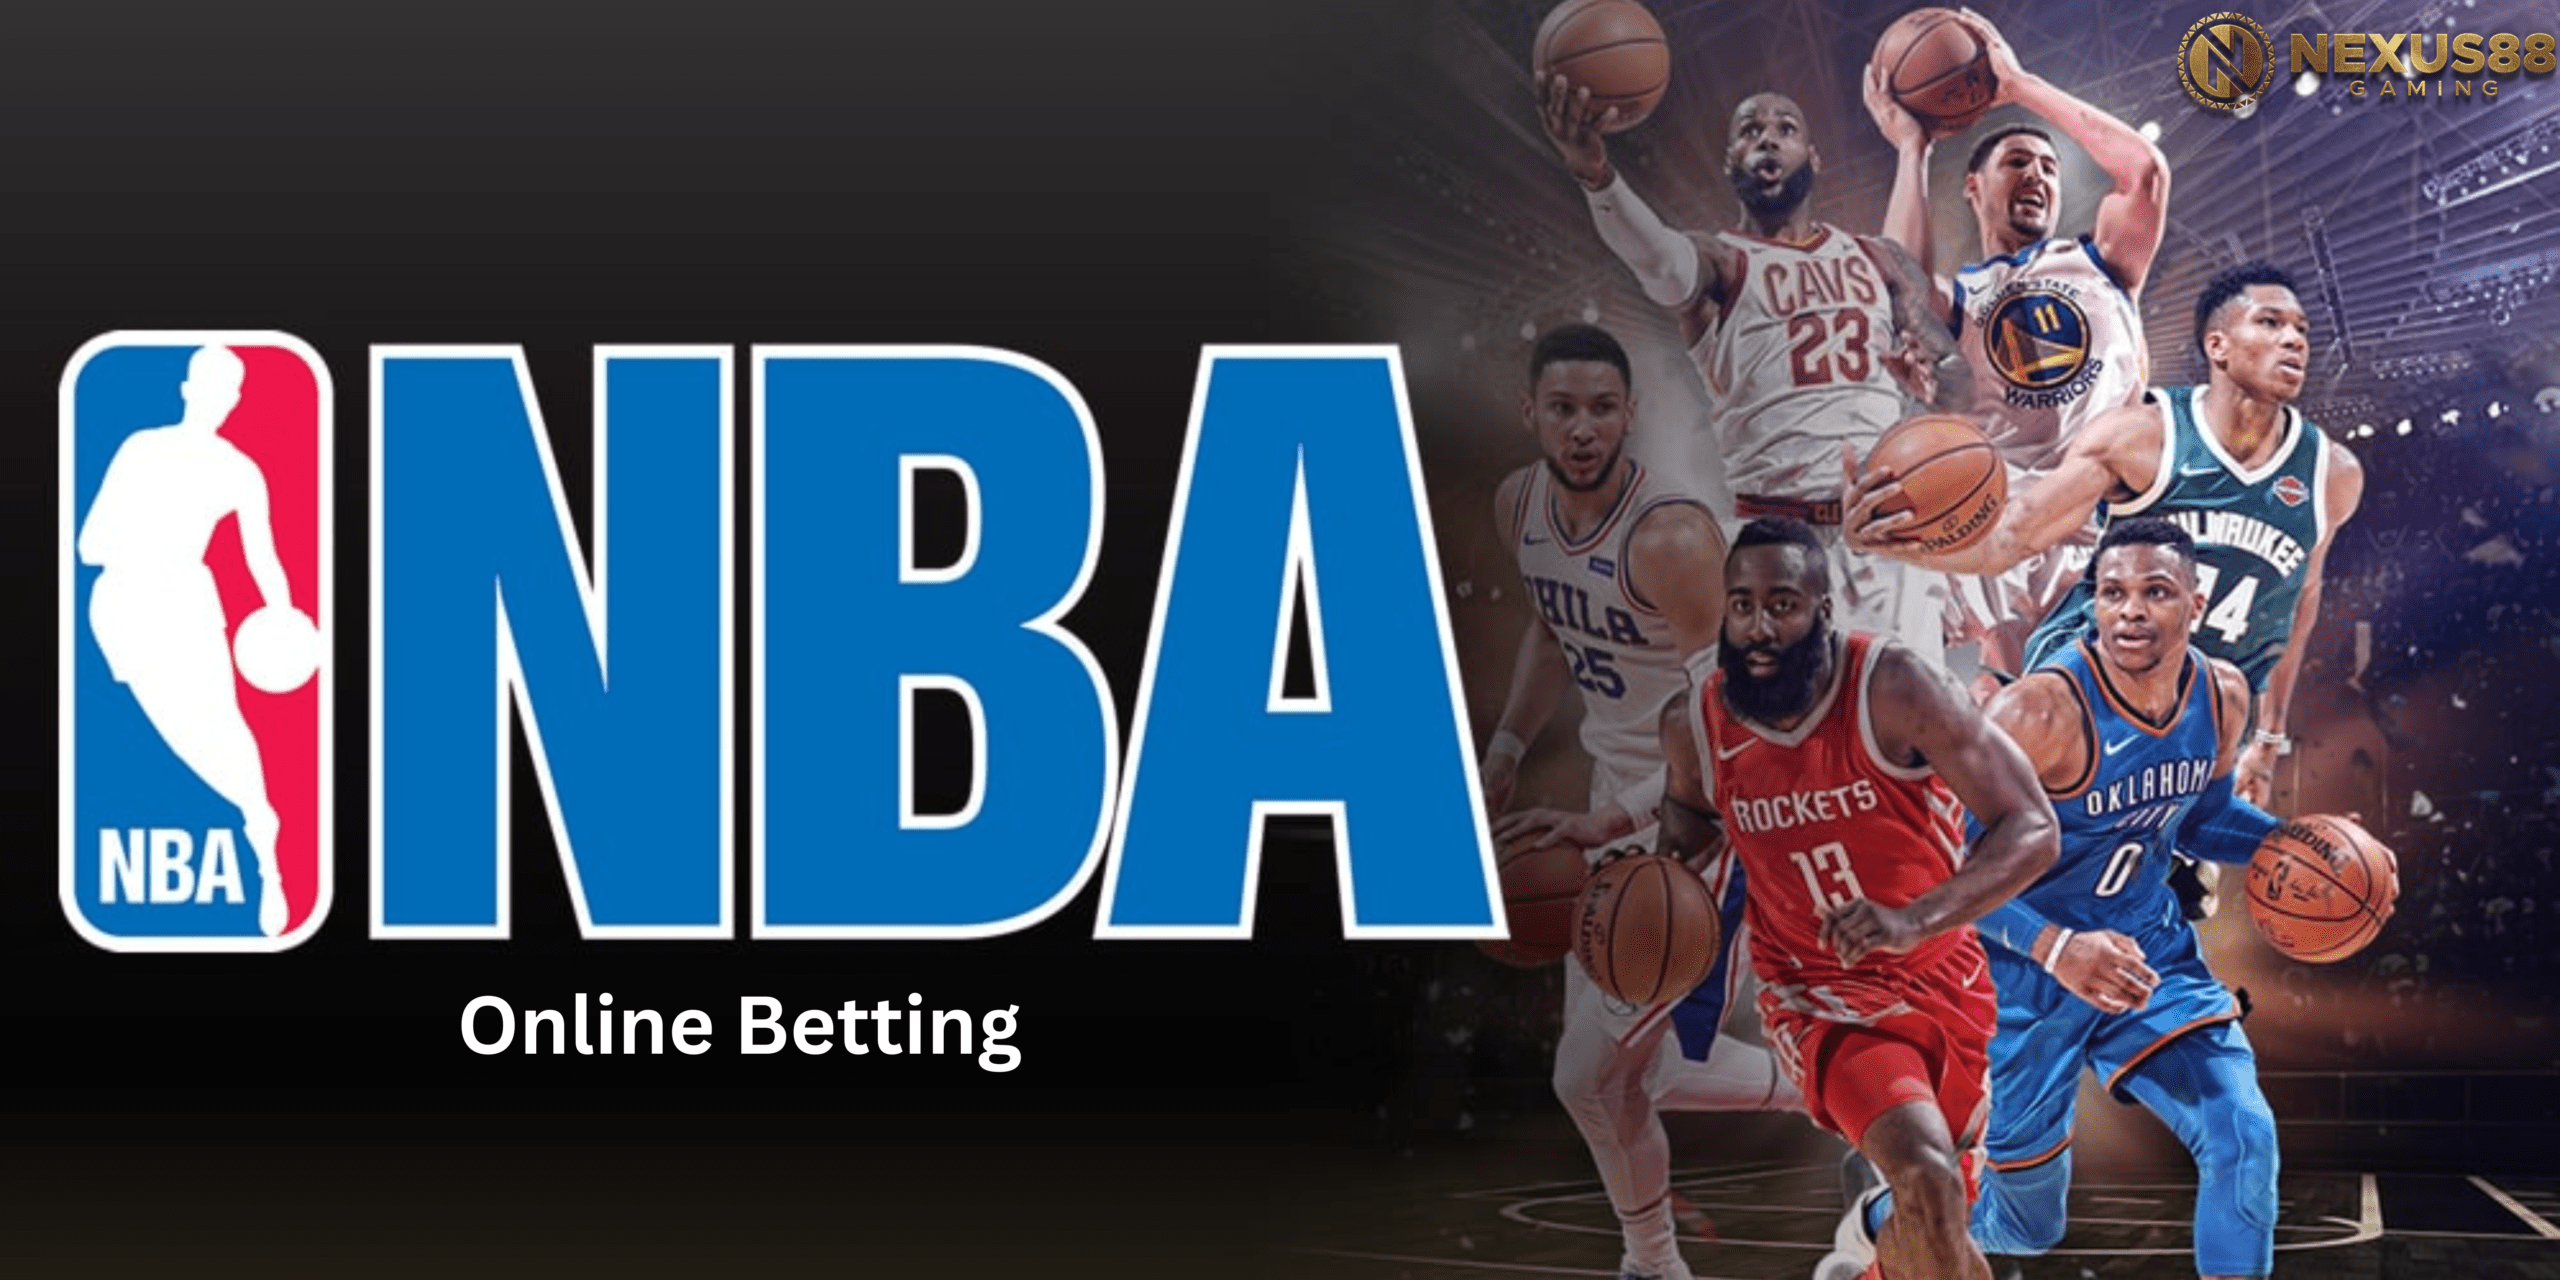 NBA Online Betting